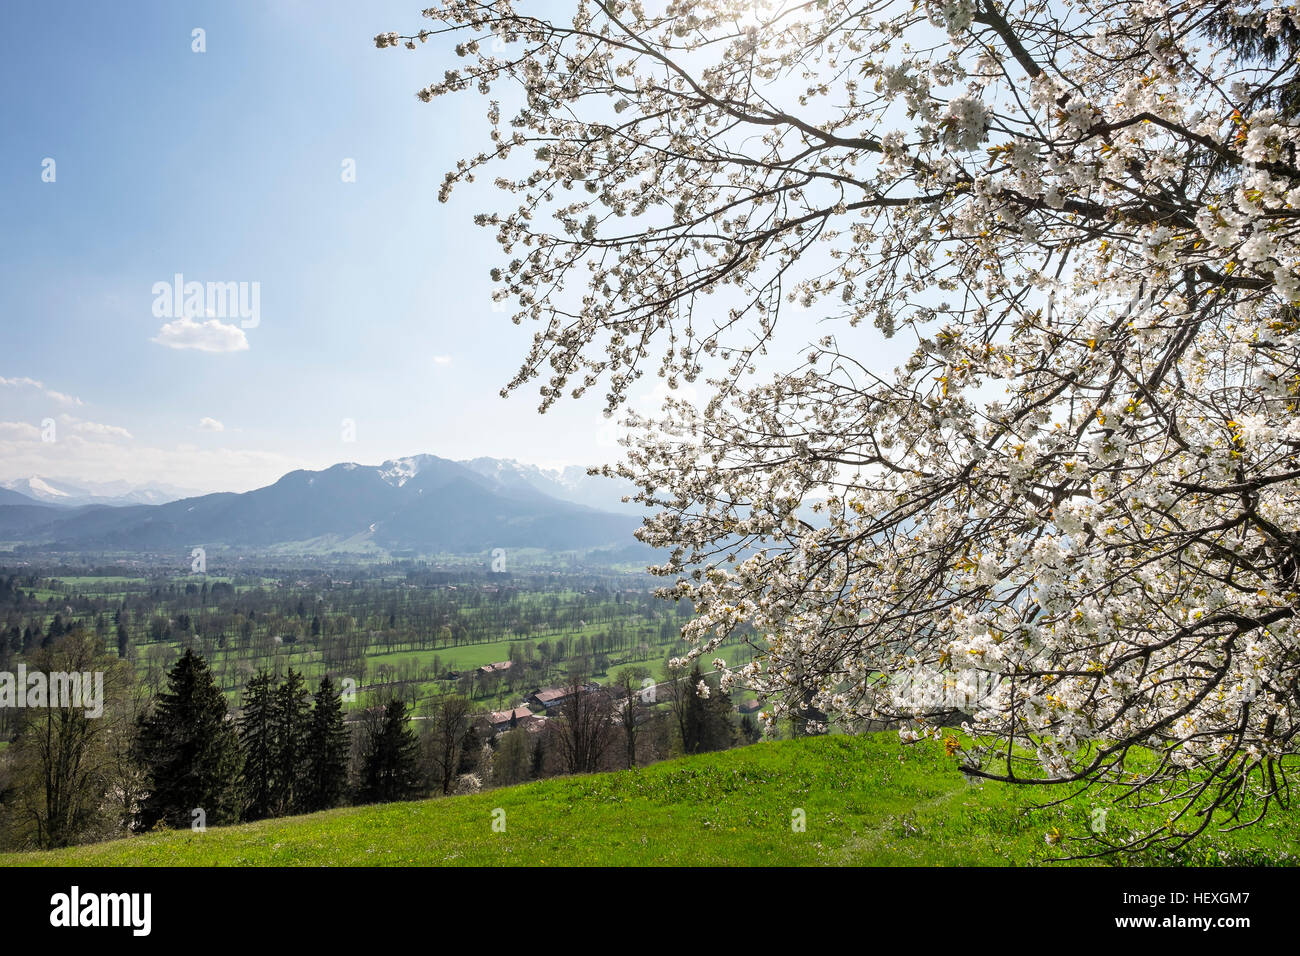 Germany, Isarwinkel, blossoming cherry tree at Sonntraten Stock Photo